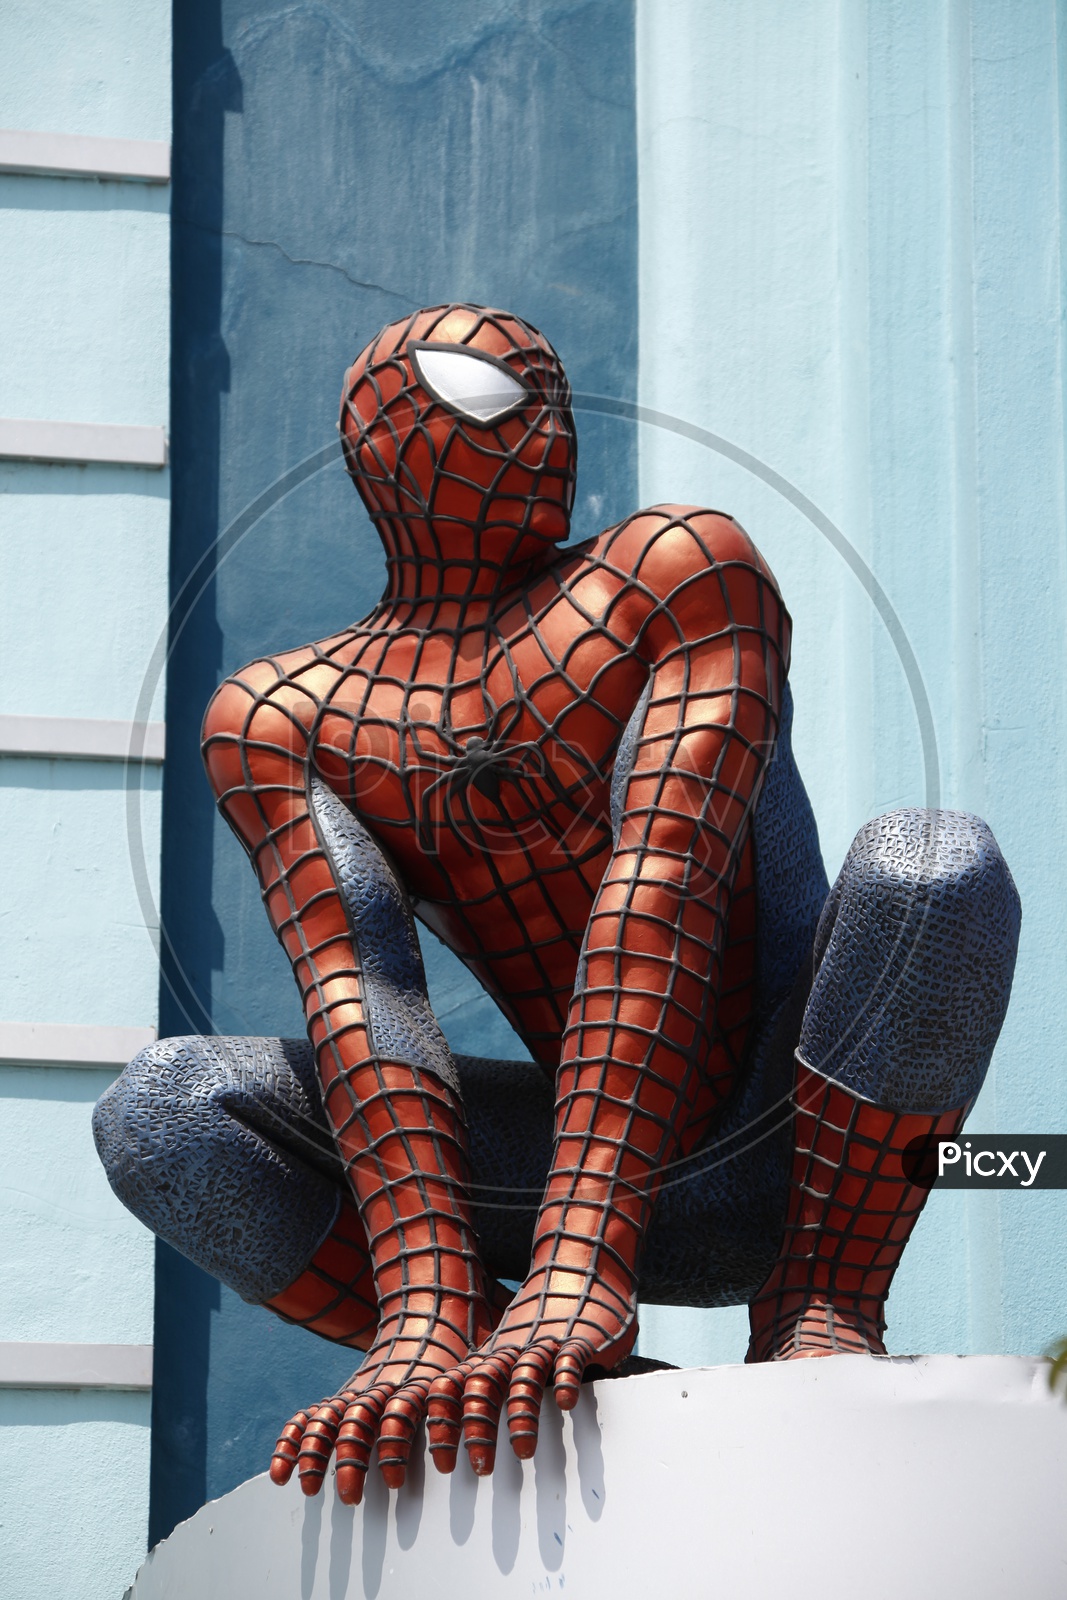 Spiderman's statue